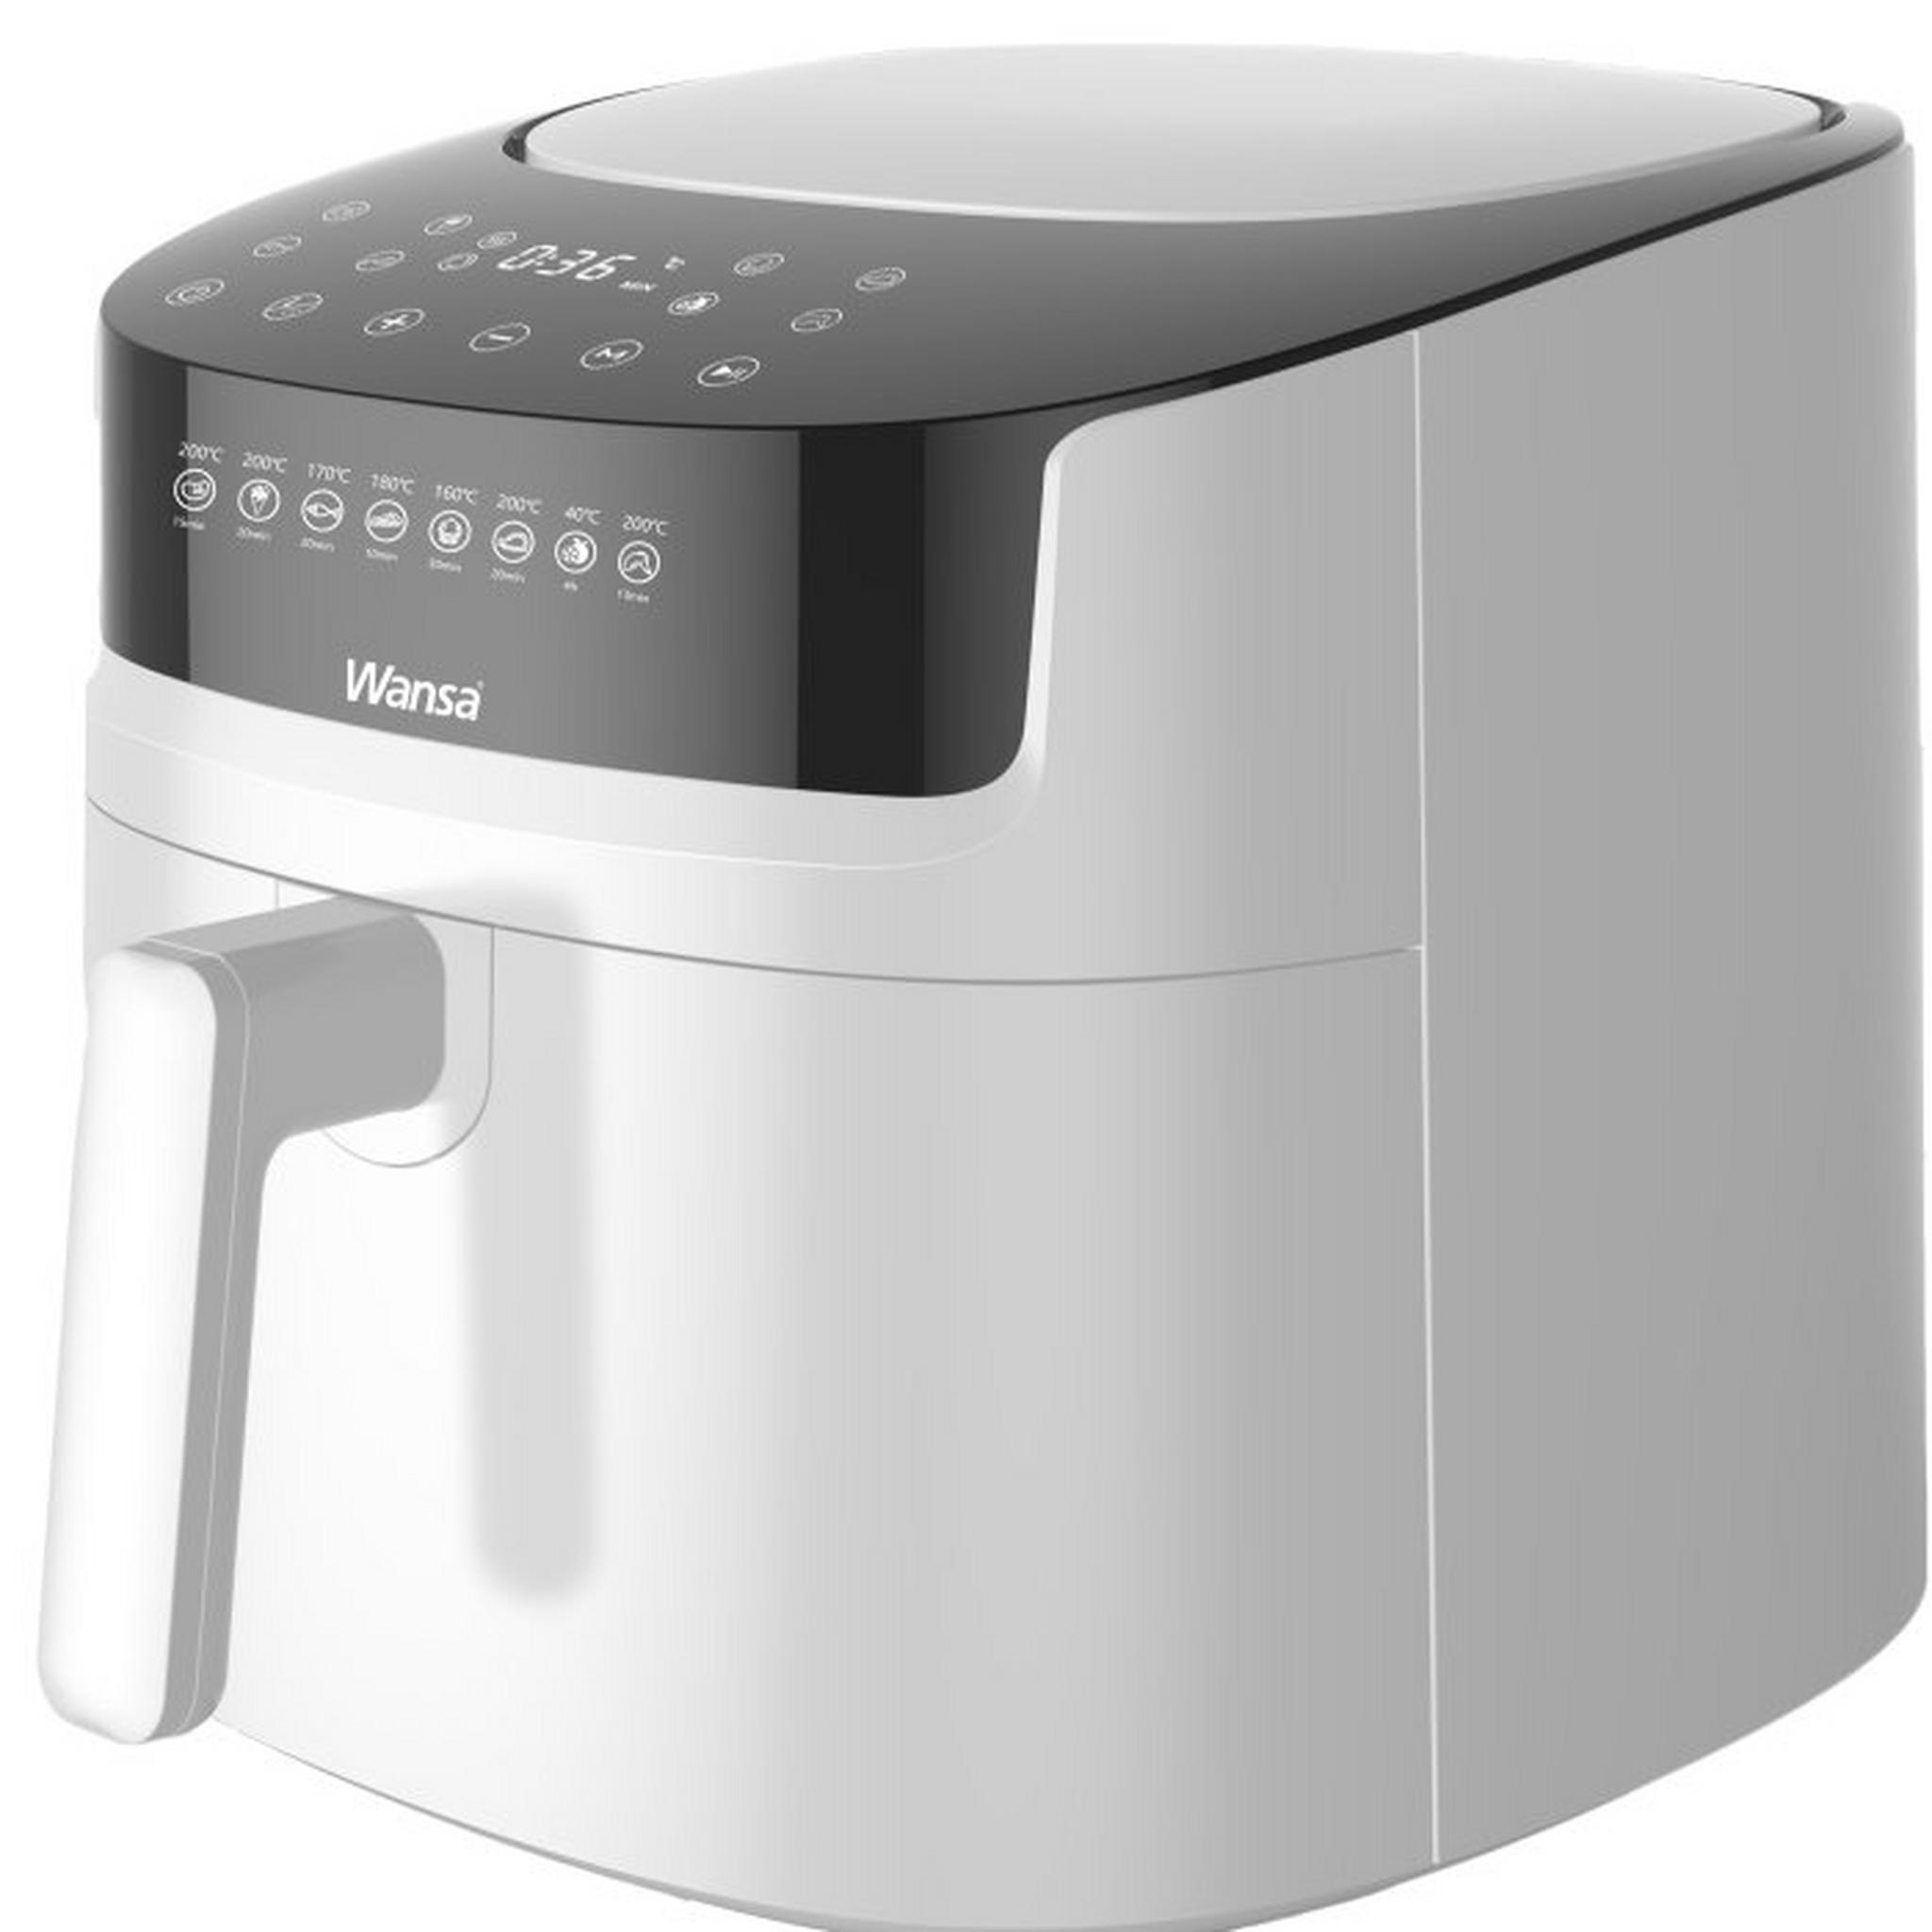 Wansa Air Fryer, 6.5 L, 1800W, AF9005T-GS – White